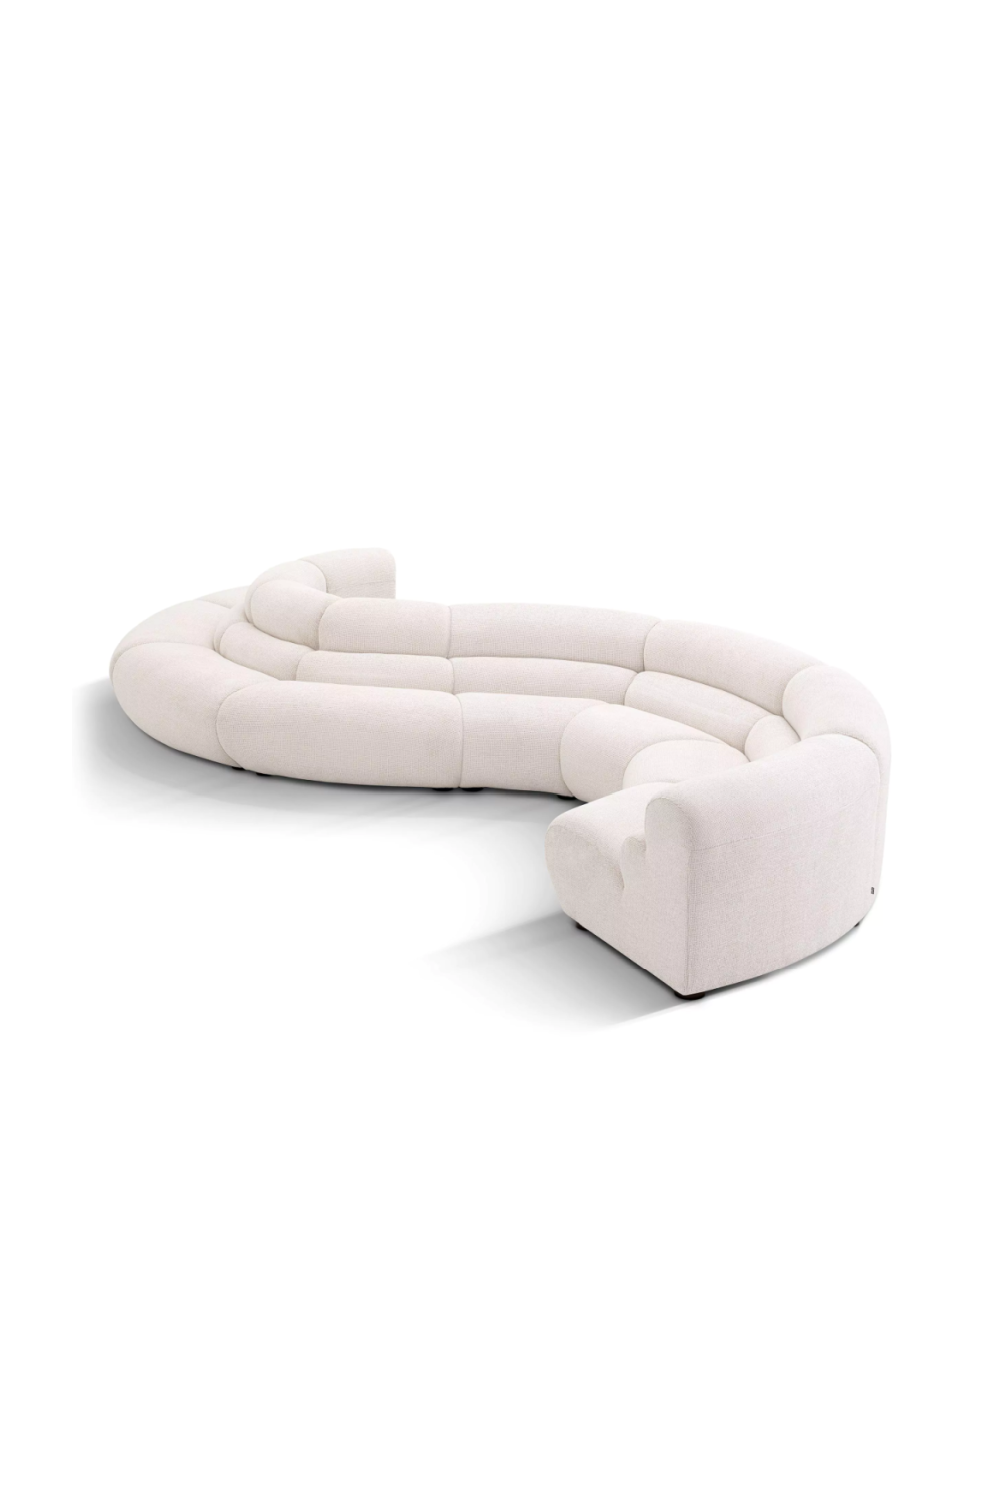 Off-White Modular Sofa | Eichholtz Lindau | Oroa.com